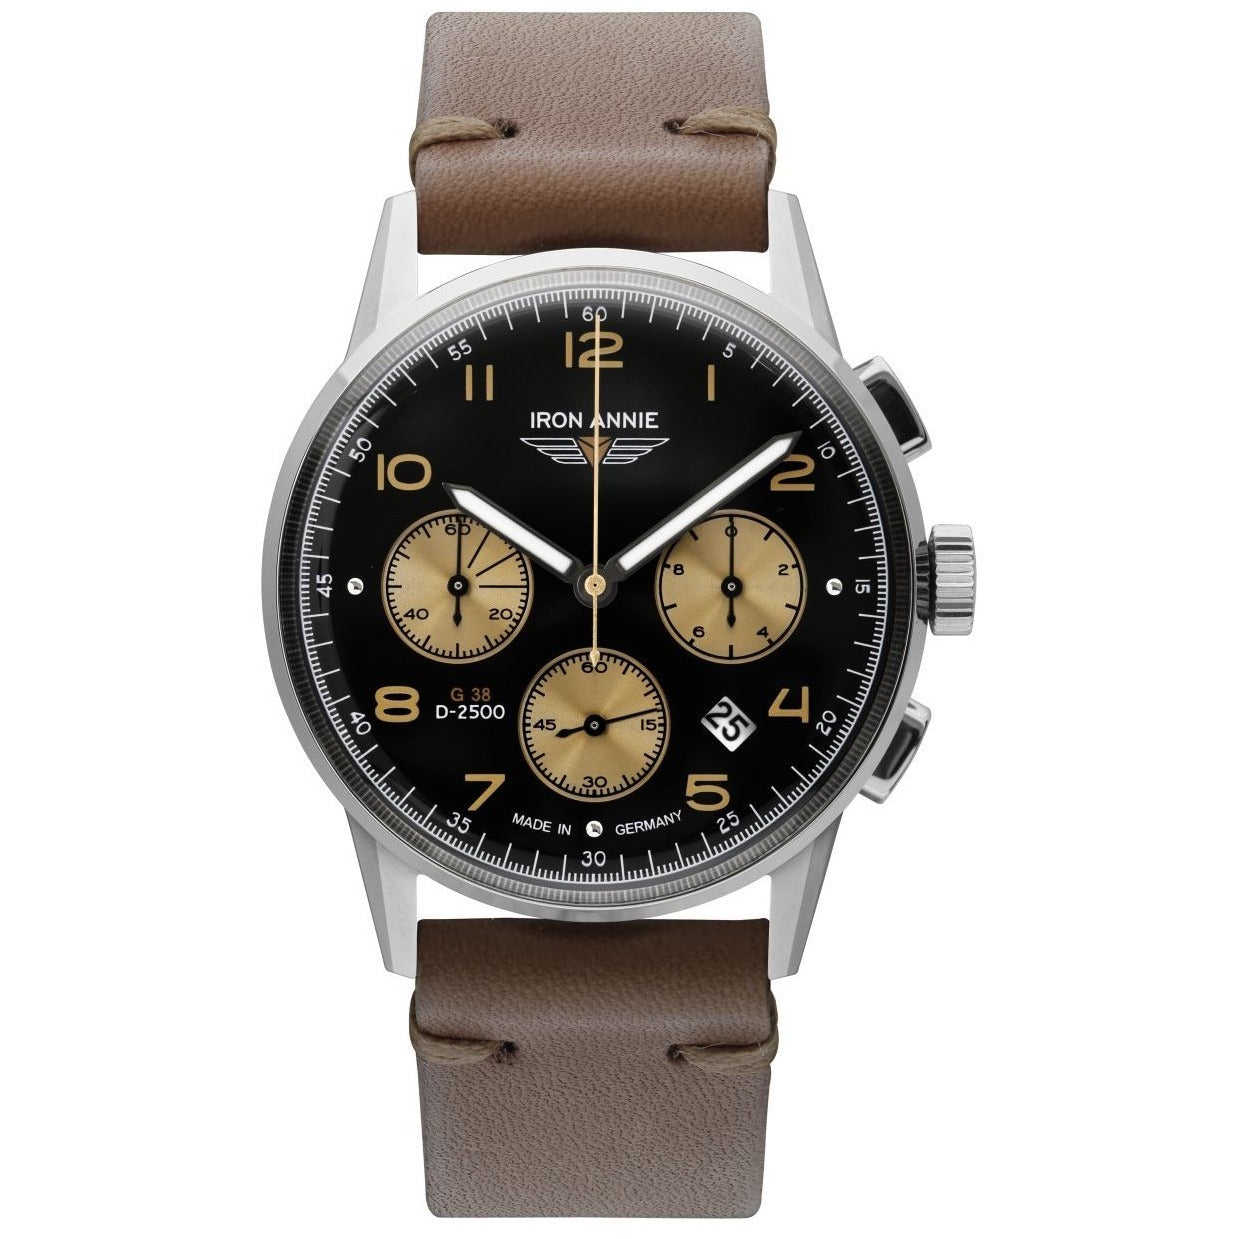 IRON ANNIE G38 Chronograph Black/Brown Watch